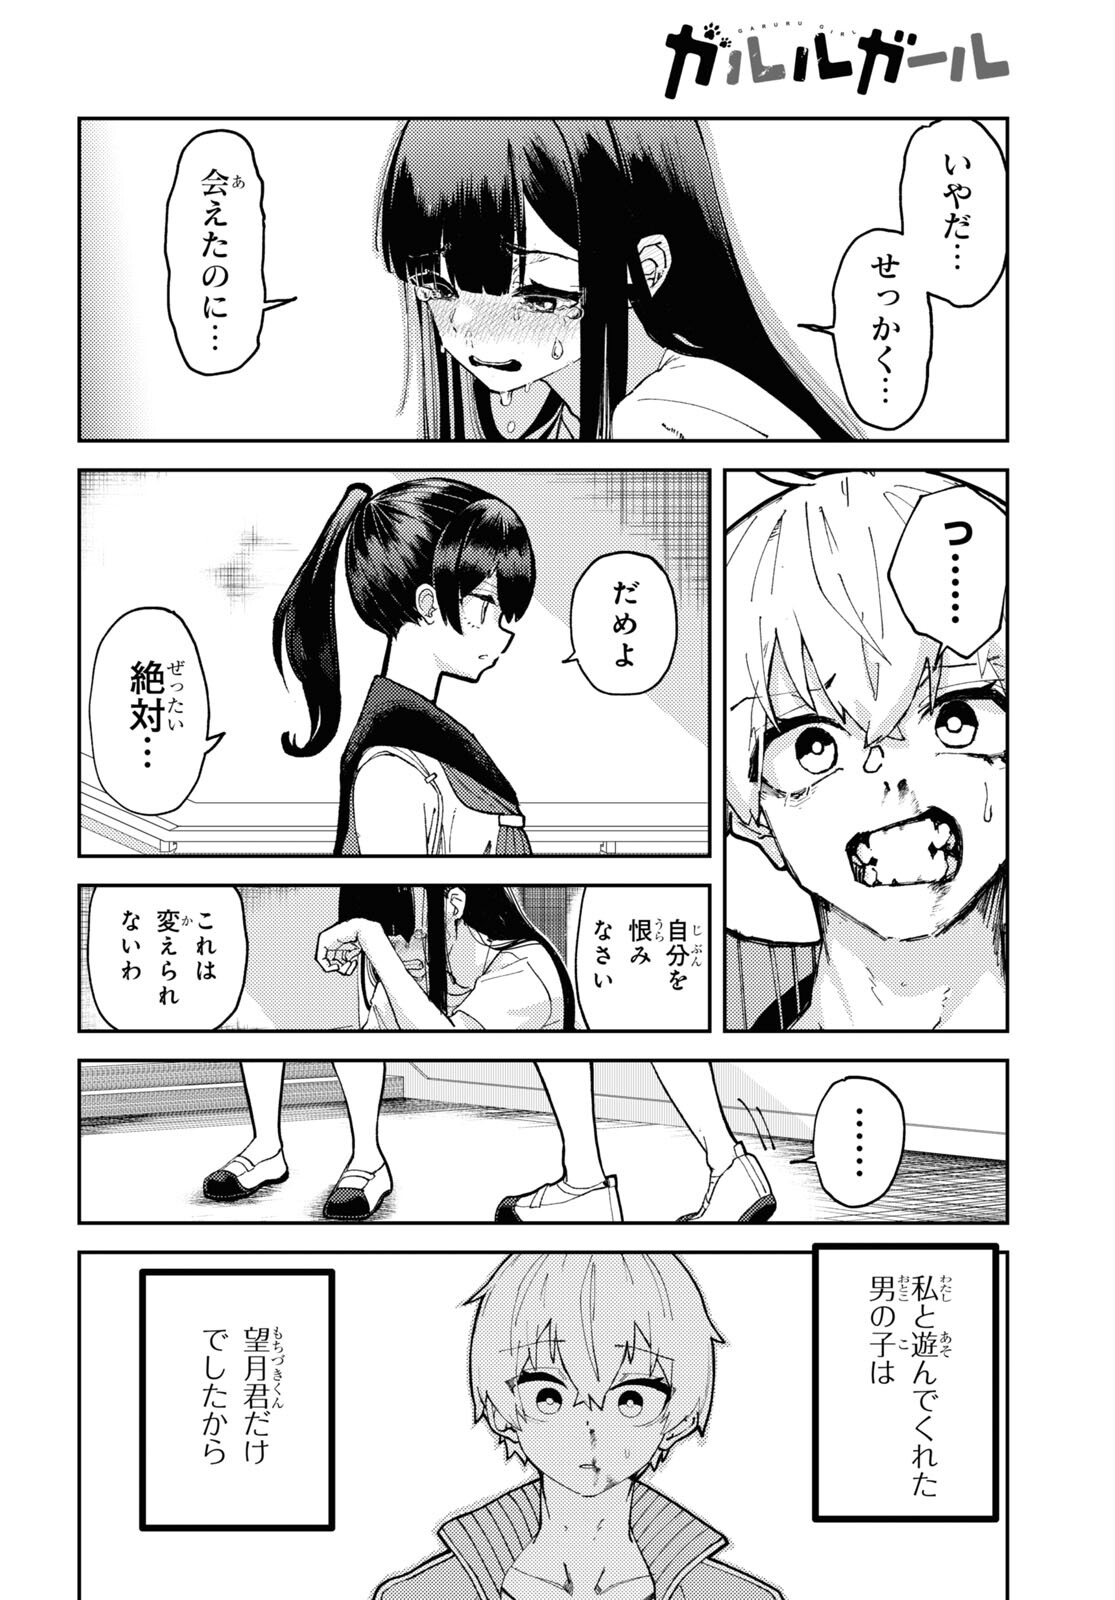 Garuru Girl - Chapter 1 - Page 35